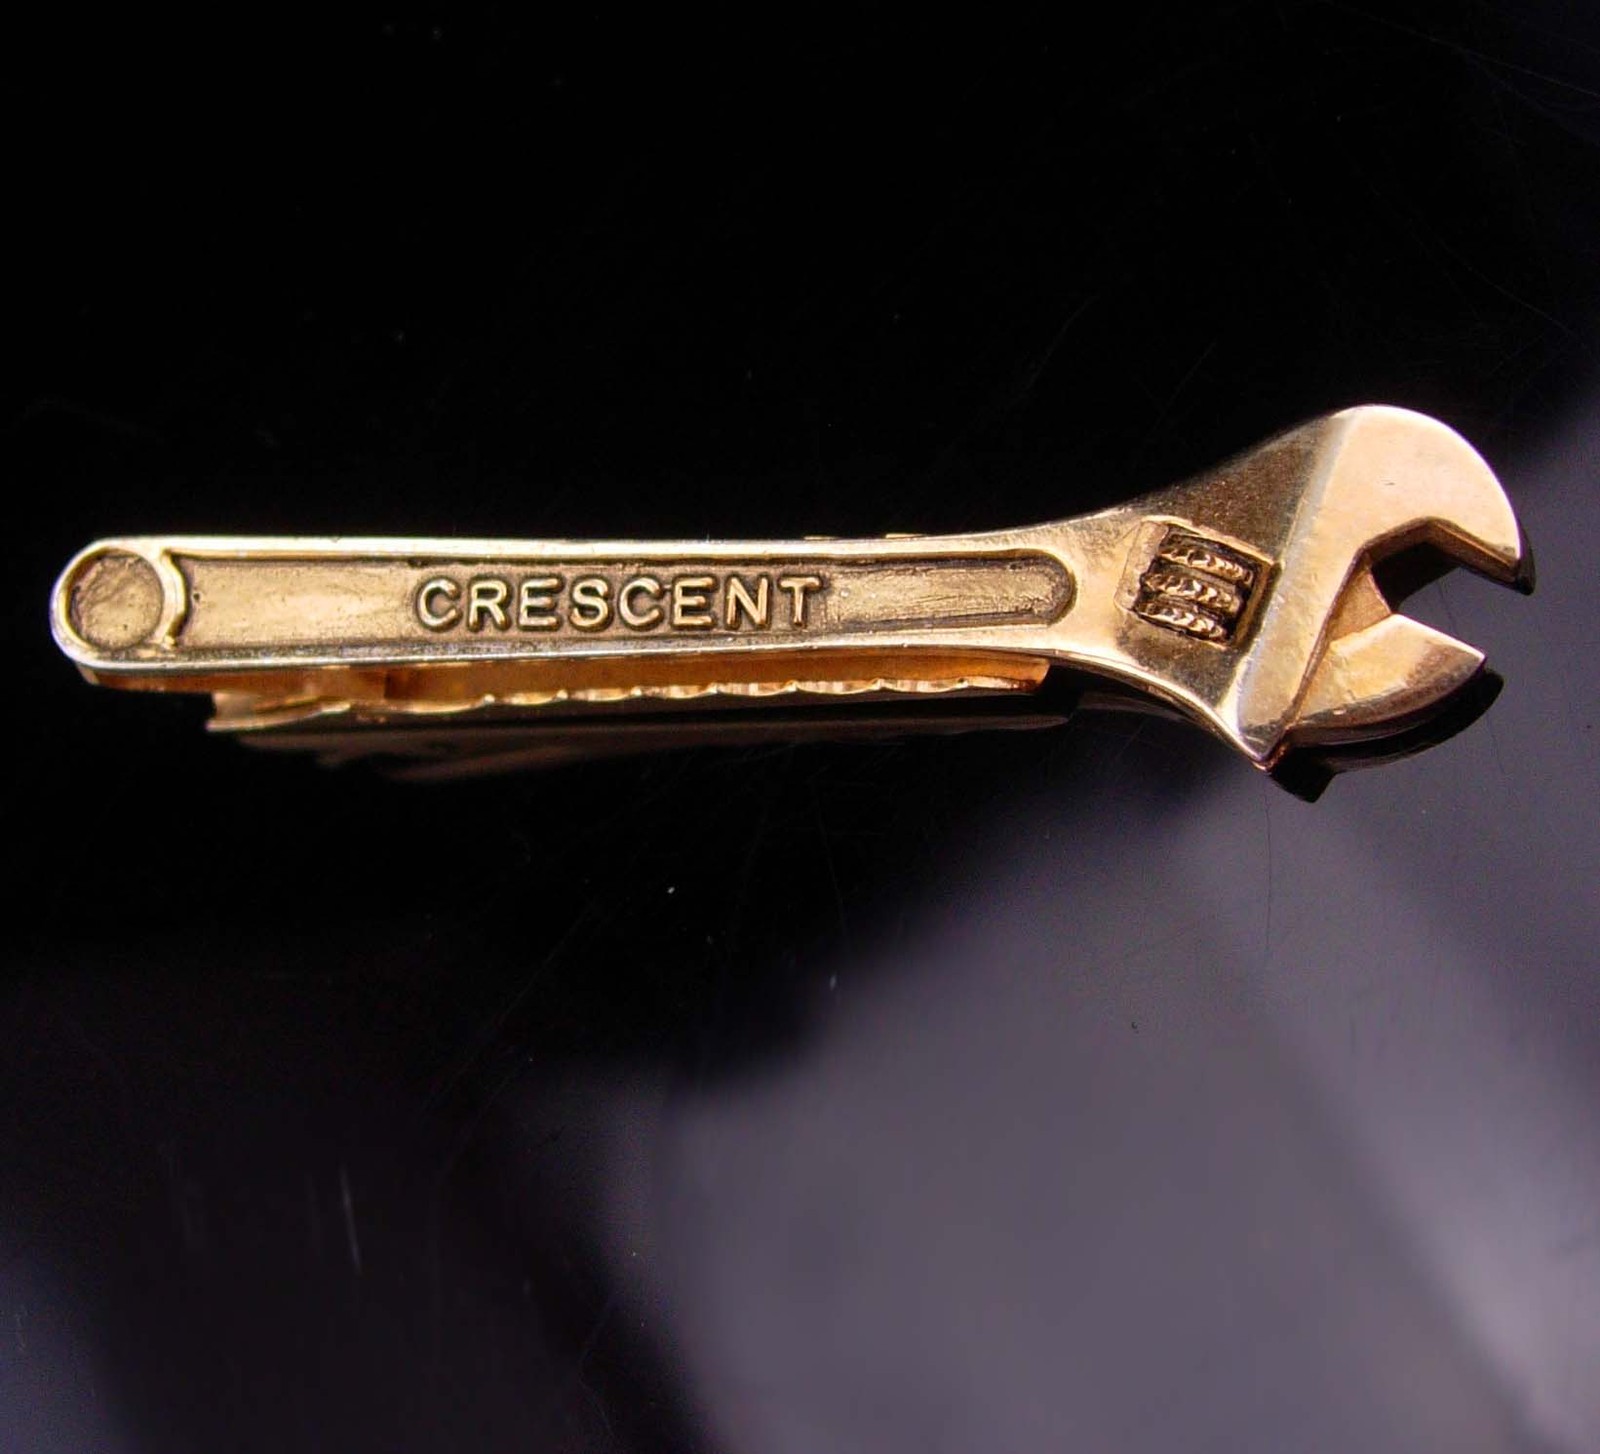 Vintage Tool tieclip / crescent wrench tie clip / Handyman tiebar / miniature go - $95.00